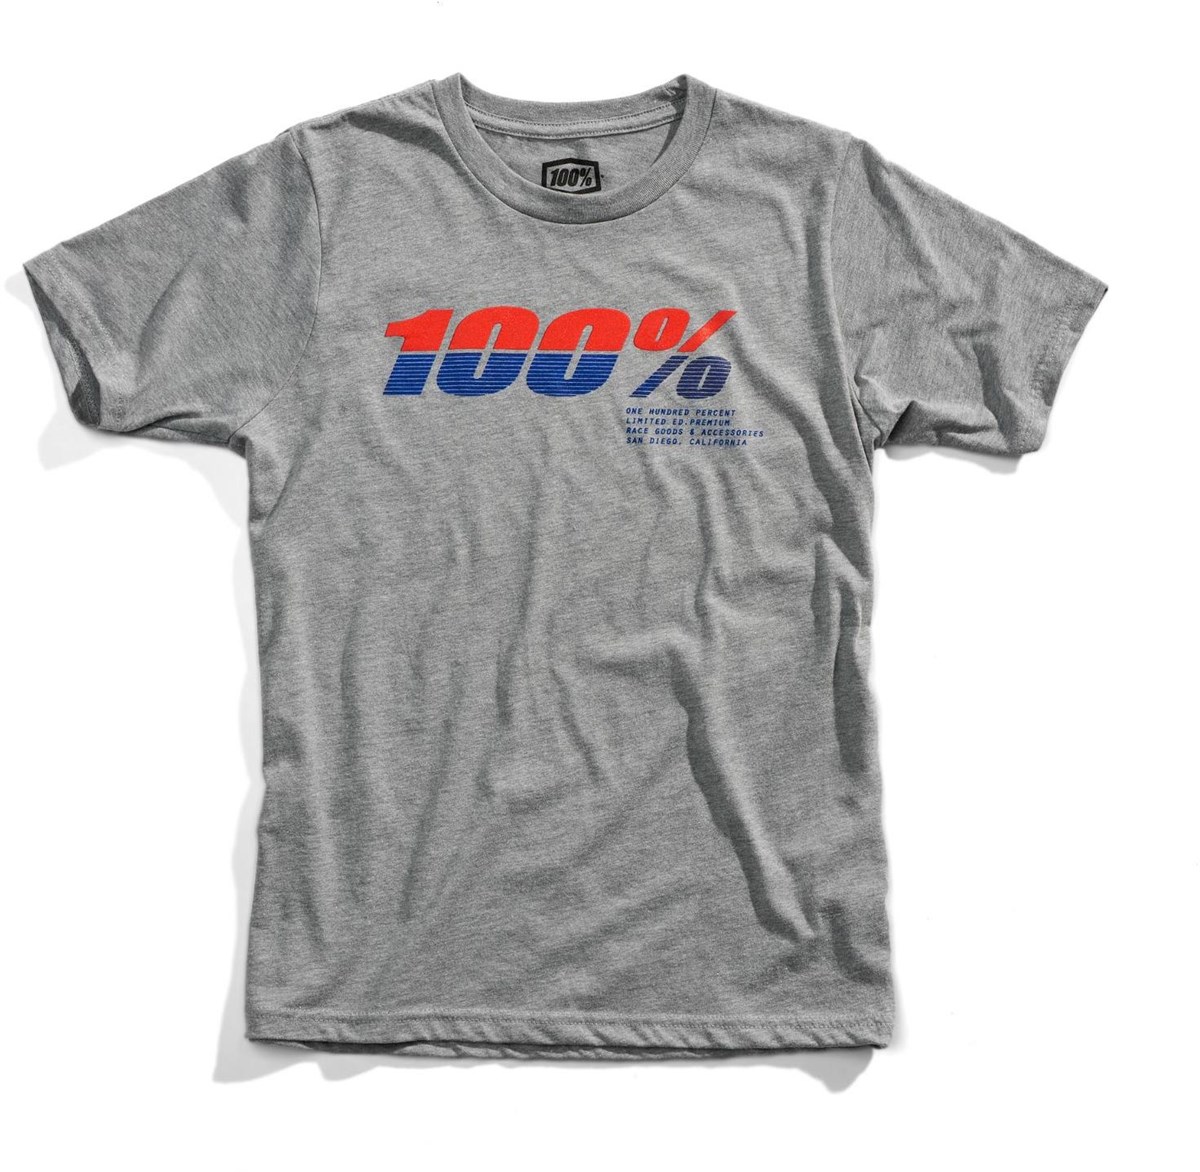 100% Bristol Youth T-Shirt product image